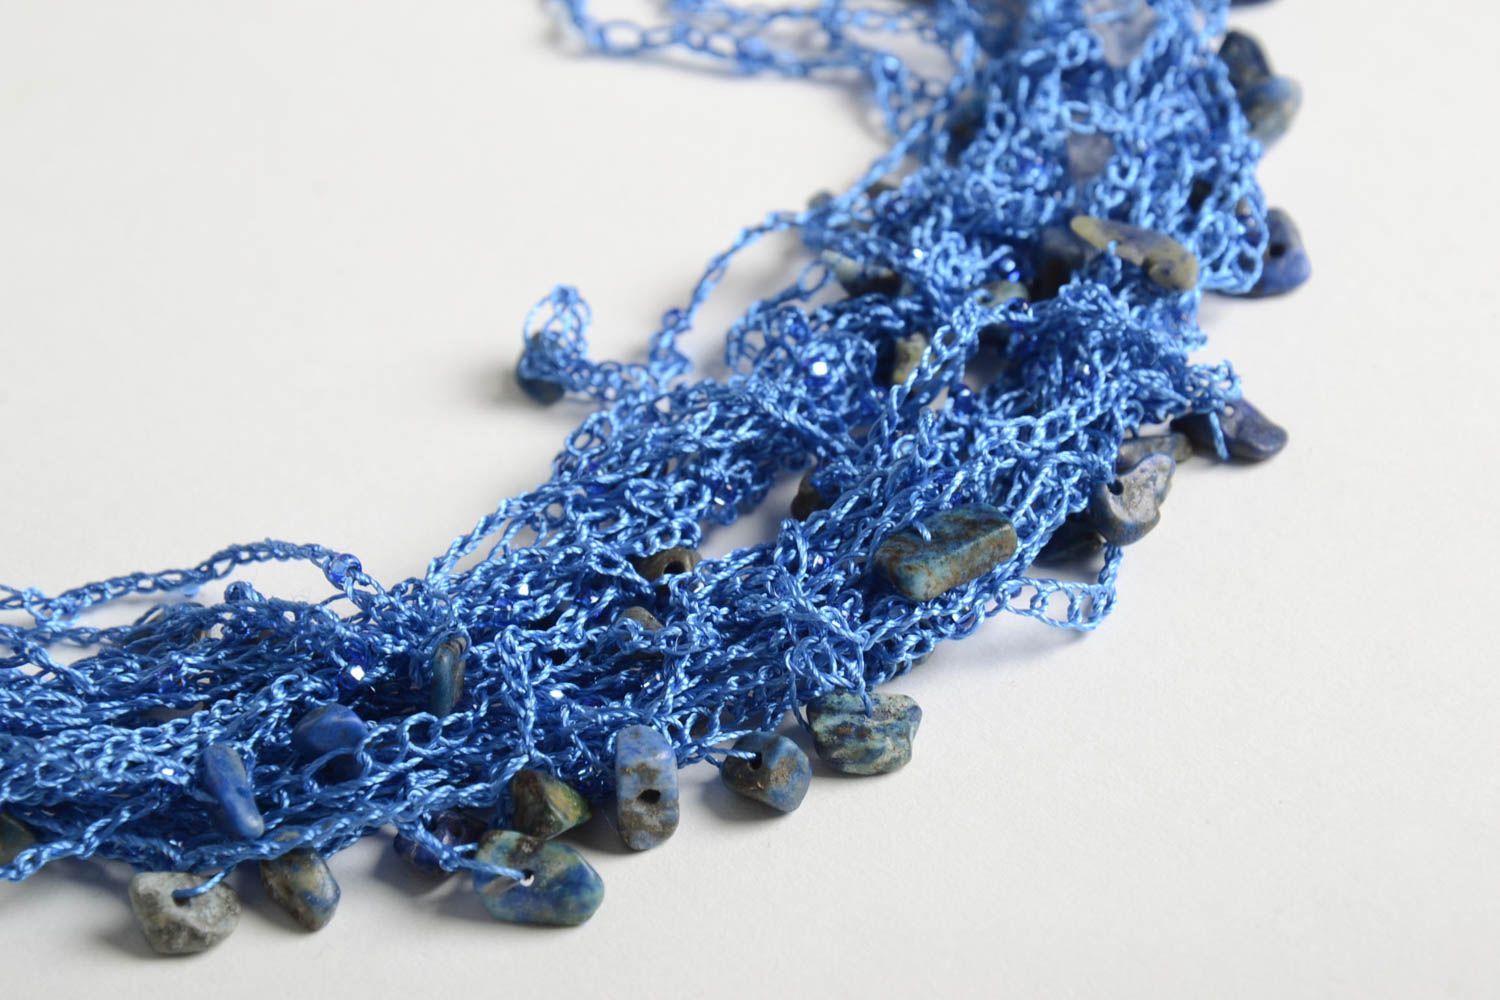 Stylish handmade crochet necklace textile jewelry designs crochet ideas photo 3